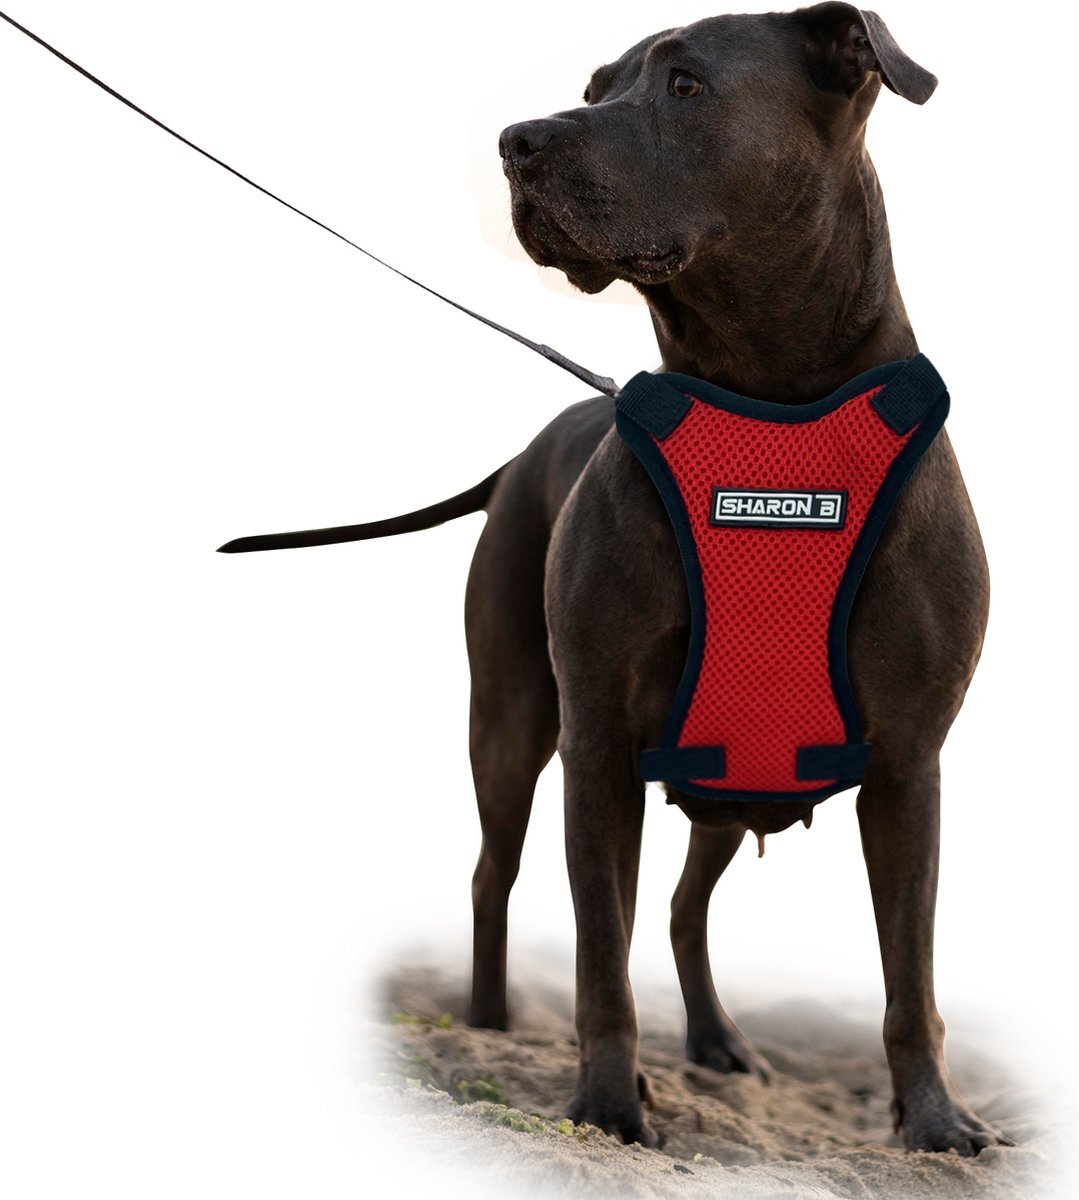 Sharon B - hondentuig - hondenharnas - rood - M - voor middelgrote honden rood